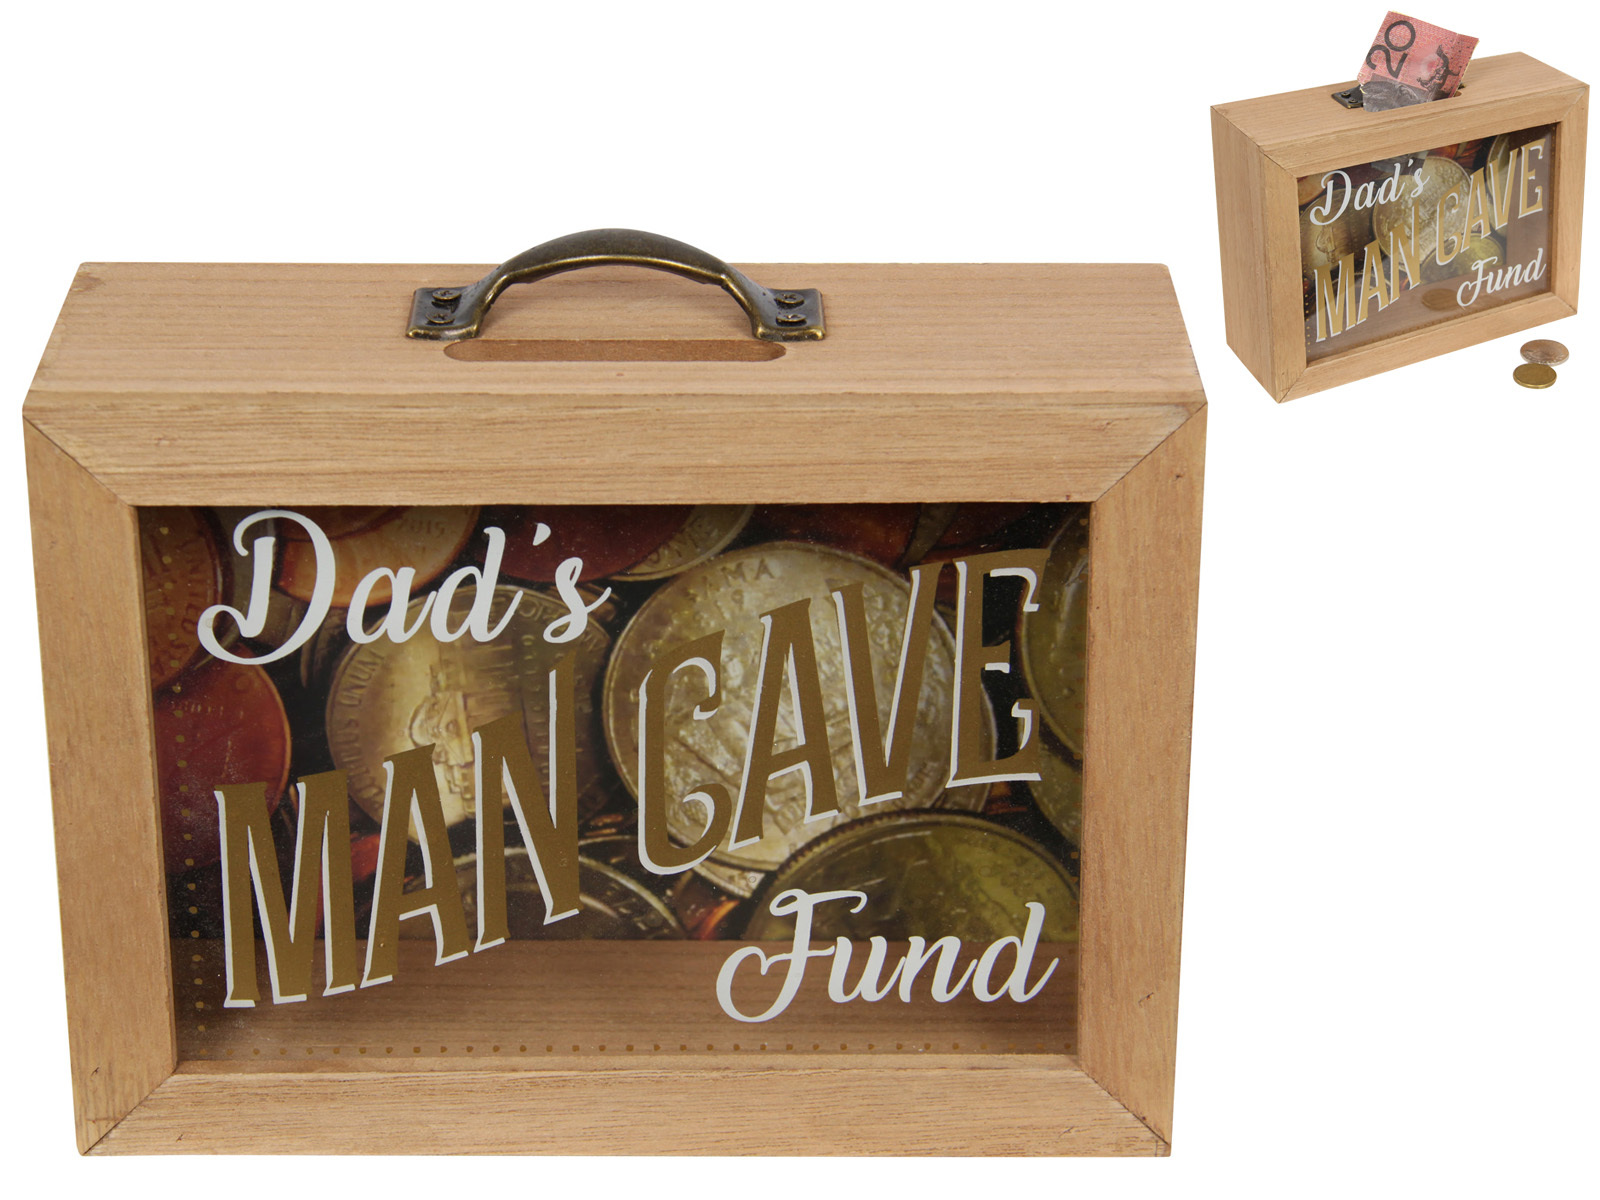 20cm Man Cave Fund Money Change Box Natural Wooden Essential Decor